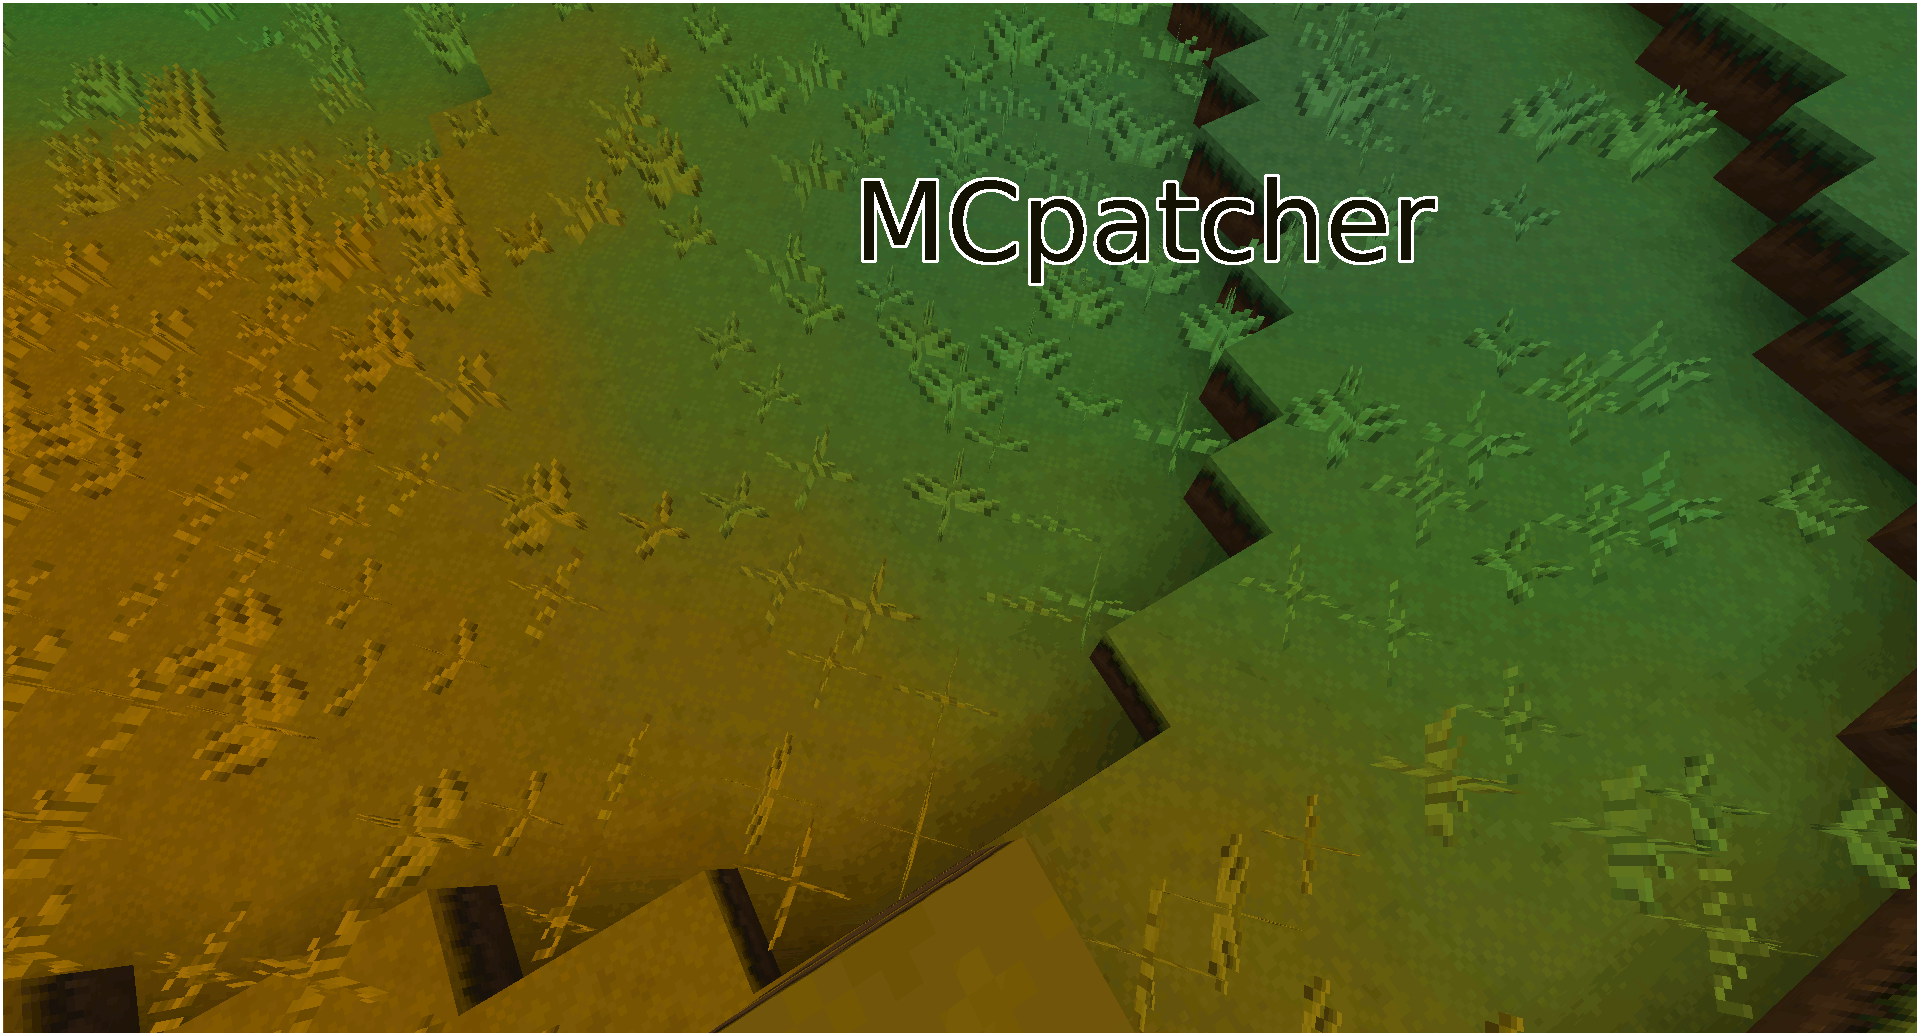 Mcpatcher/Optifine comparison